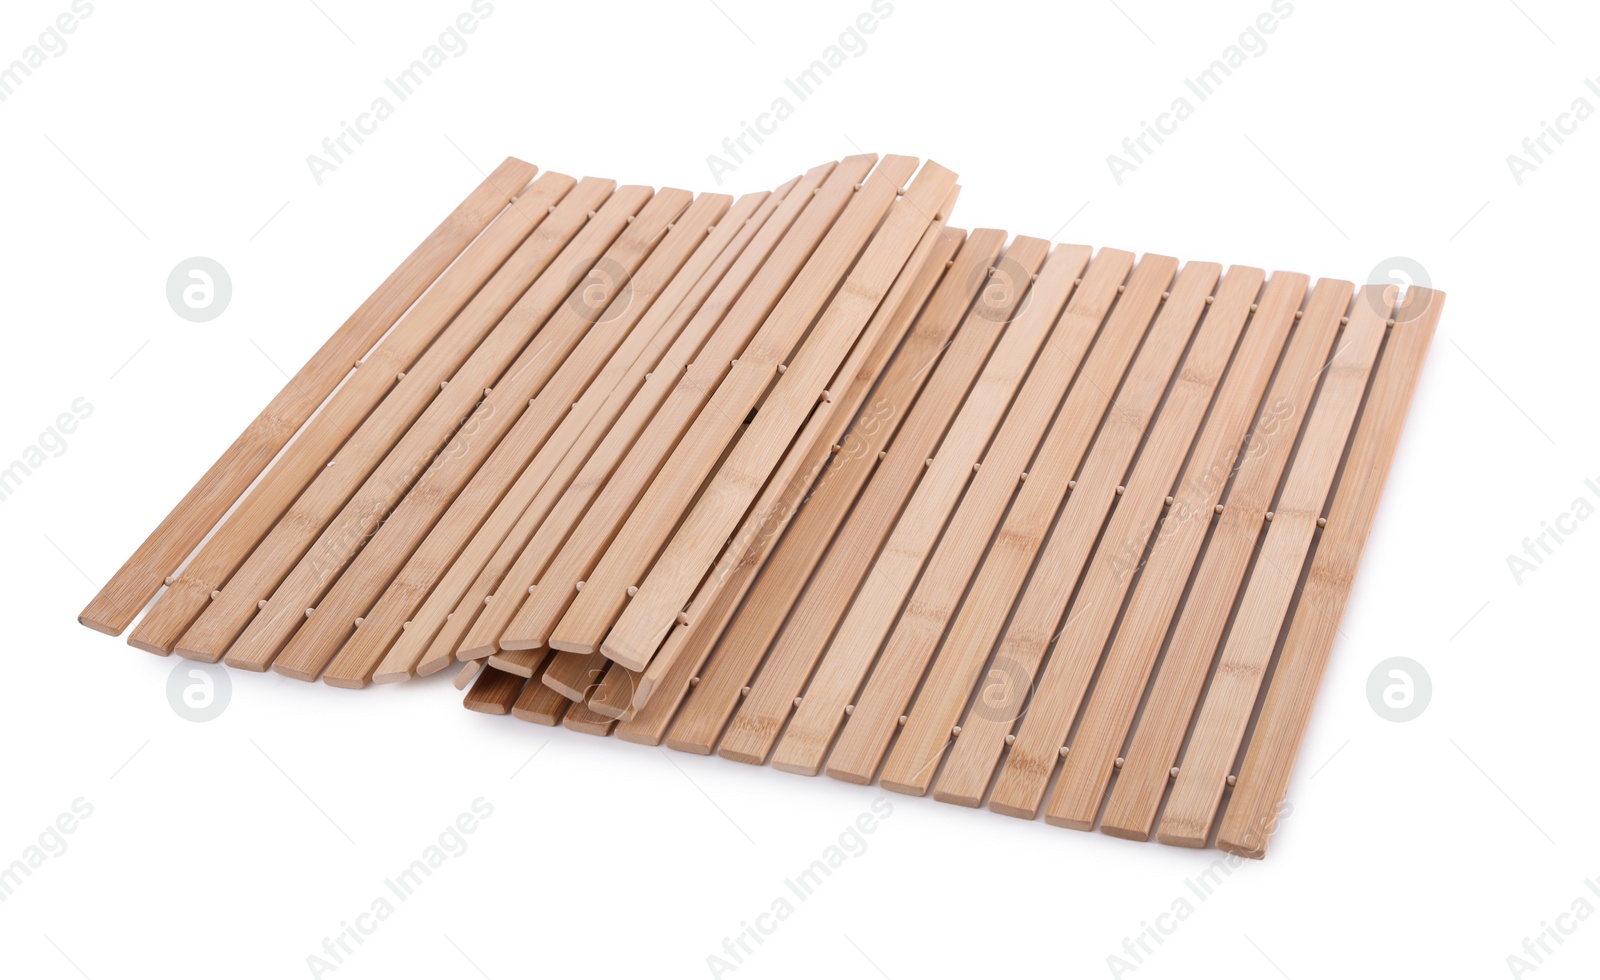 Photo of Bamboo rug isolated on white. Bath accessory